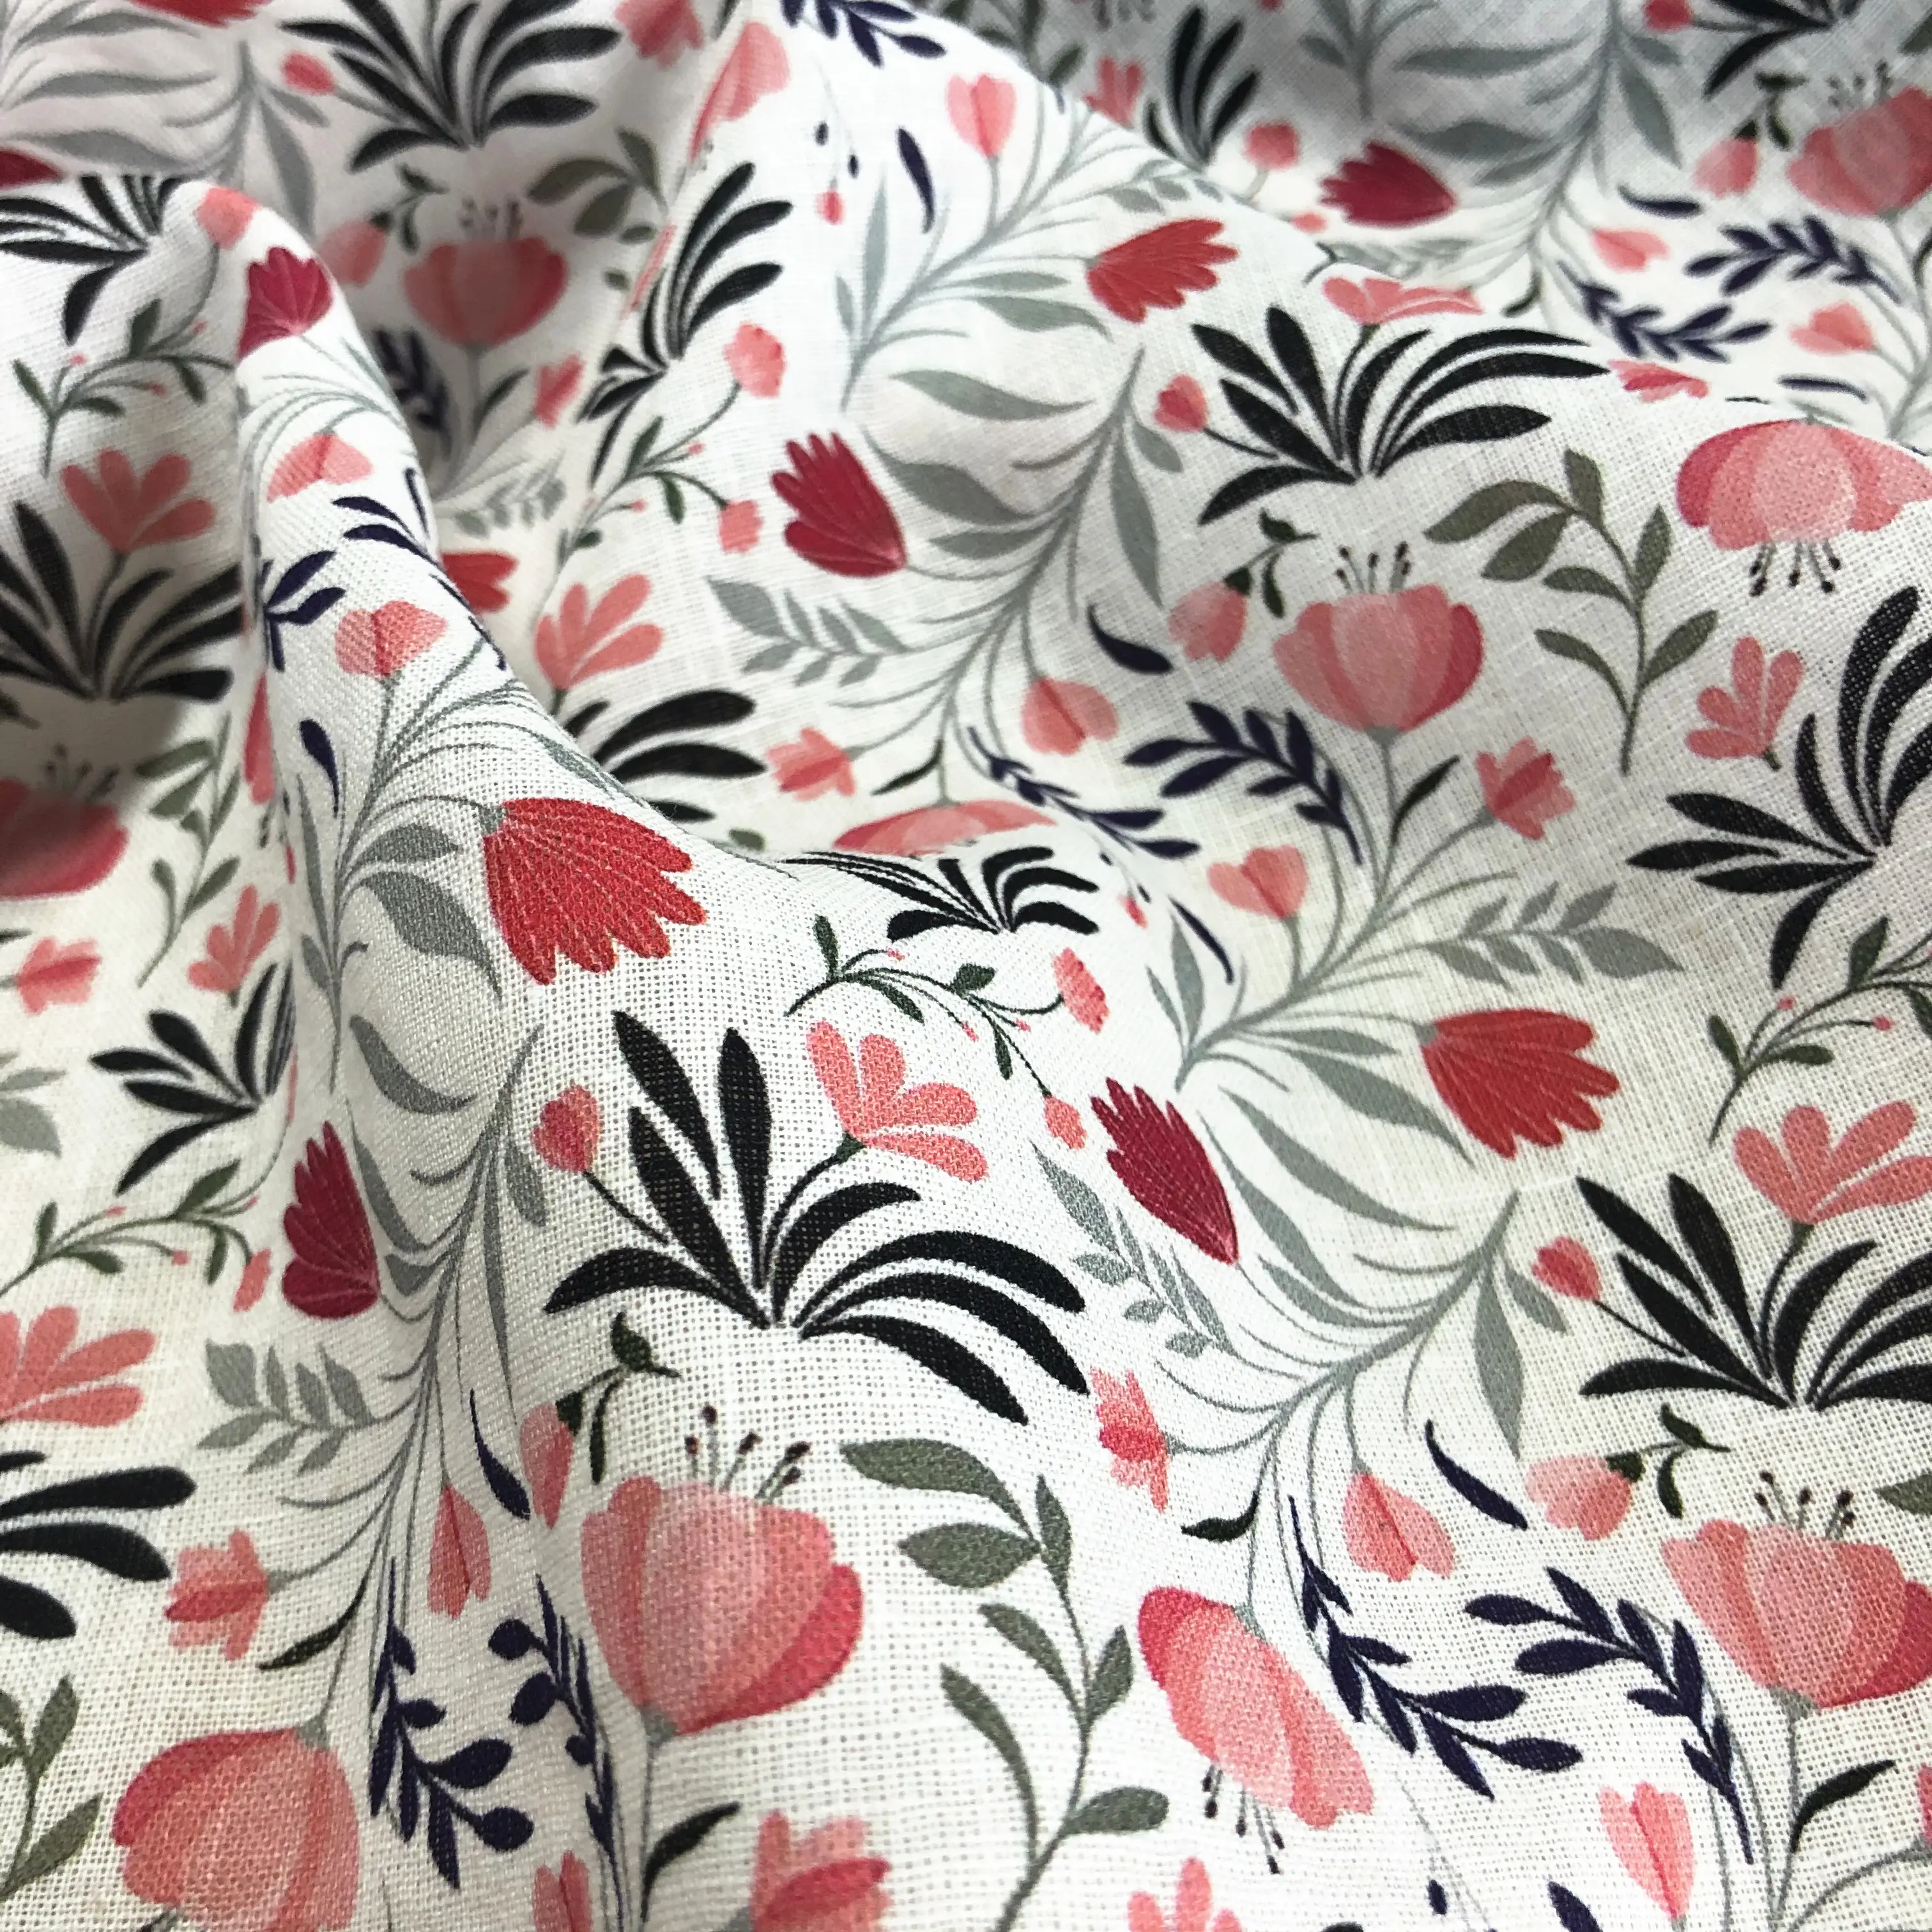 custom made digital printing apron linen cotton fabric for clothing